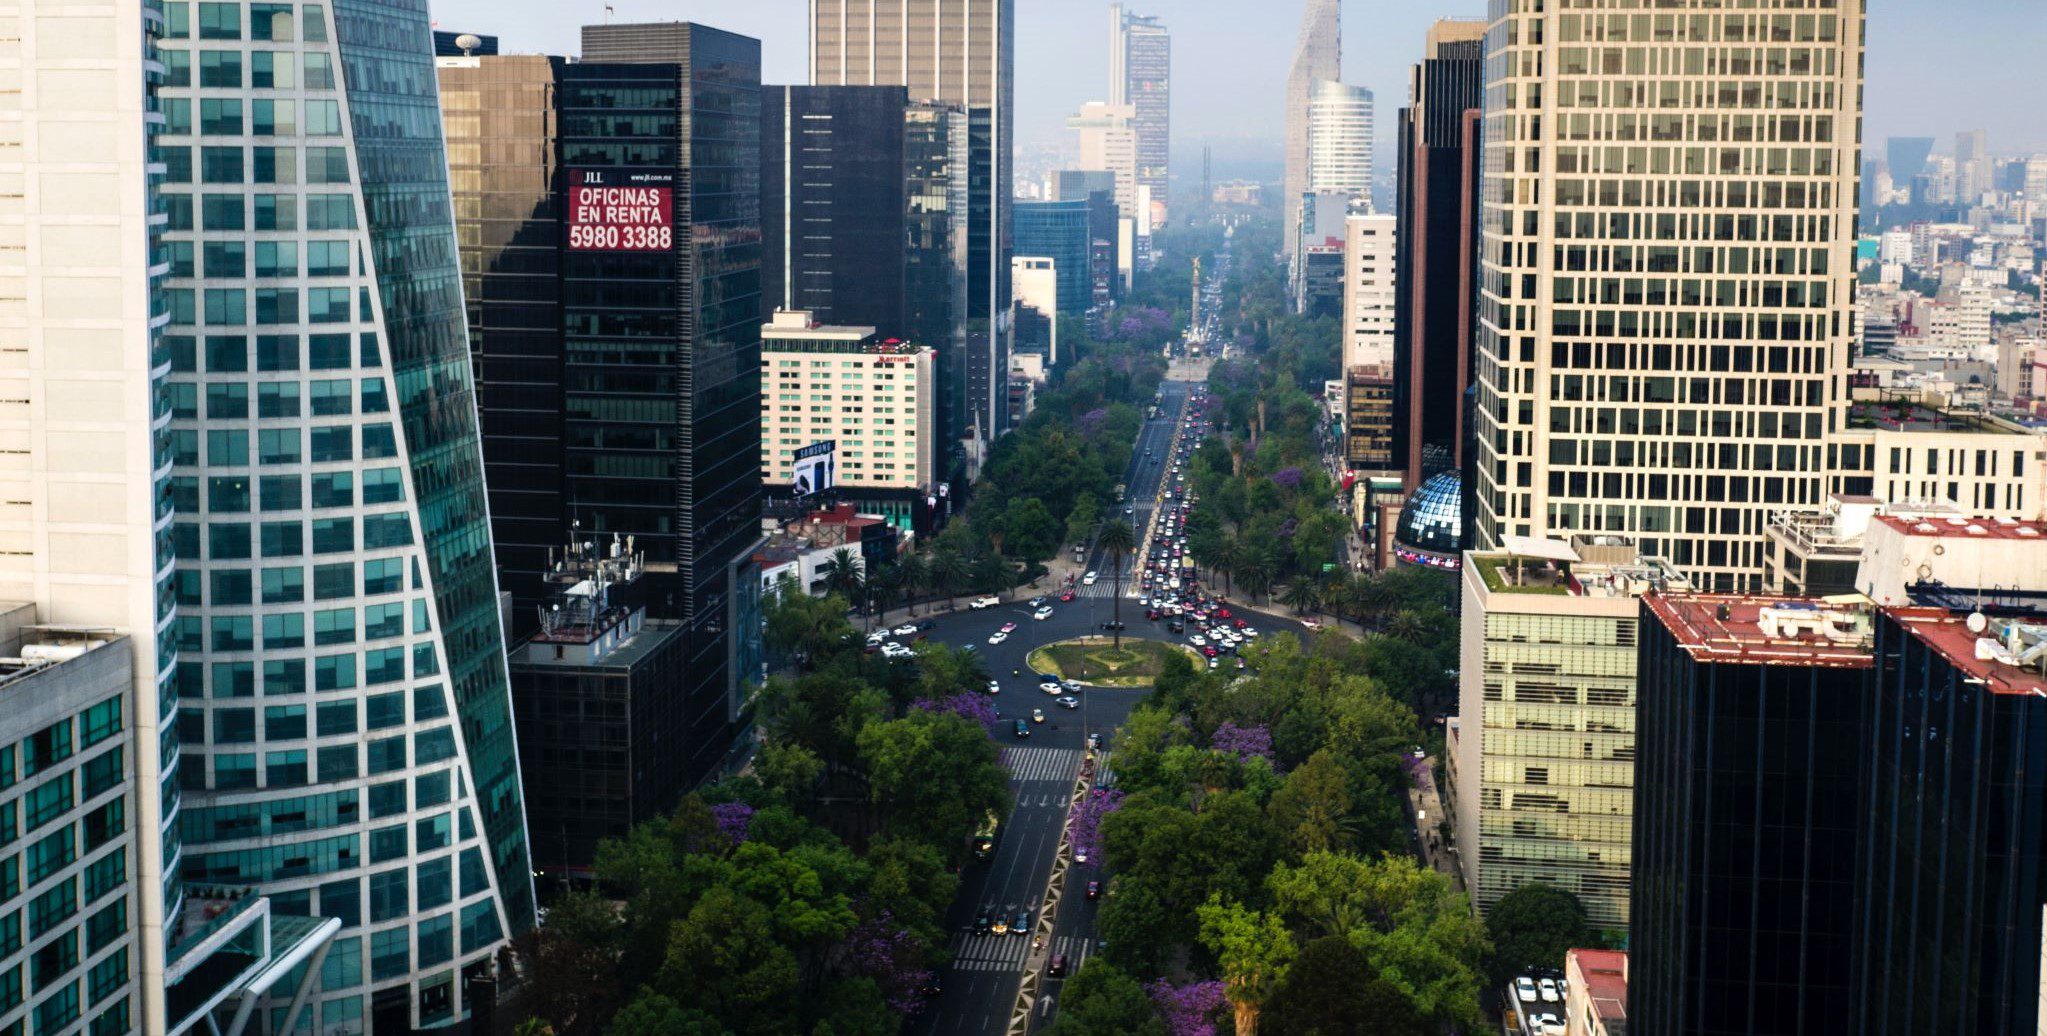 Aerial shot of Reforma Avenue in Mexico City